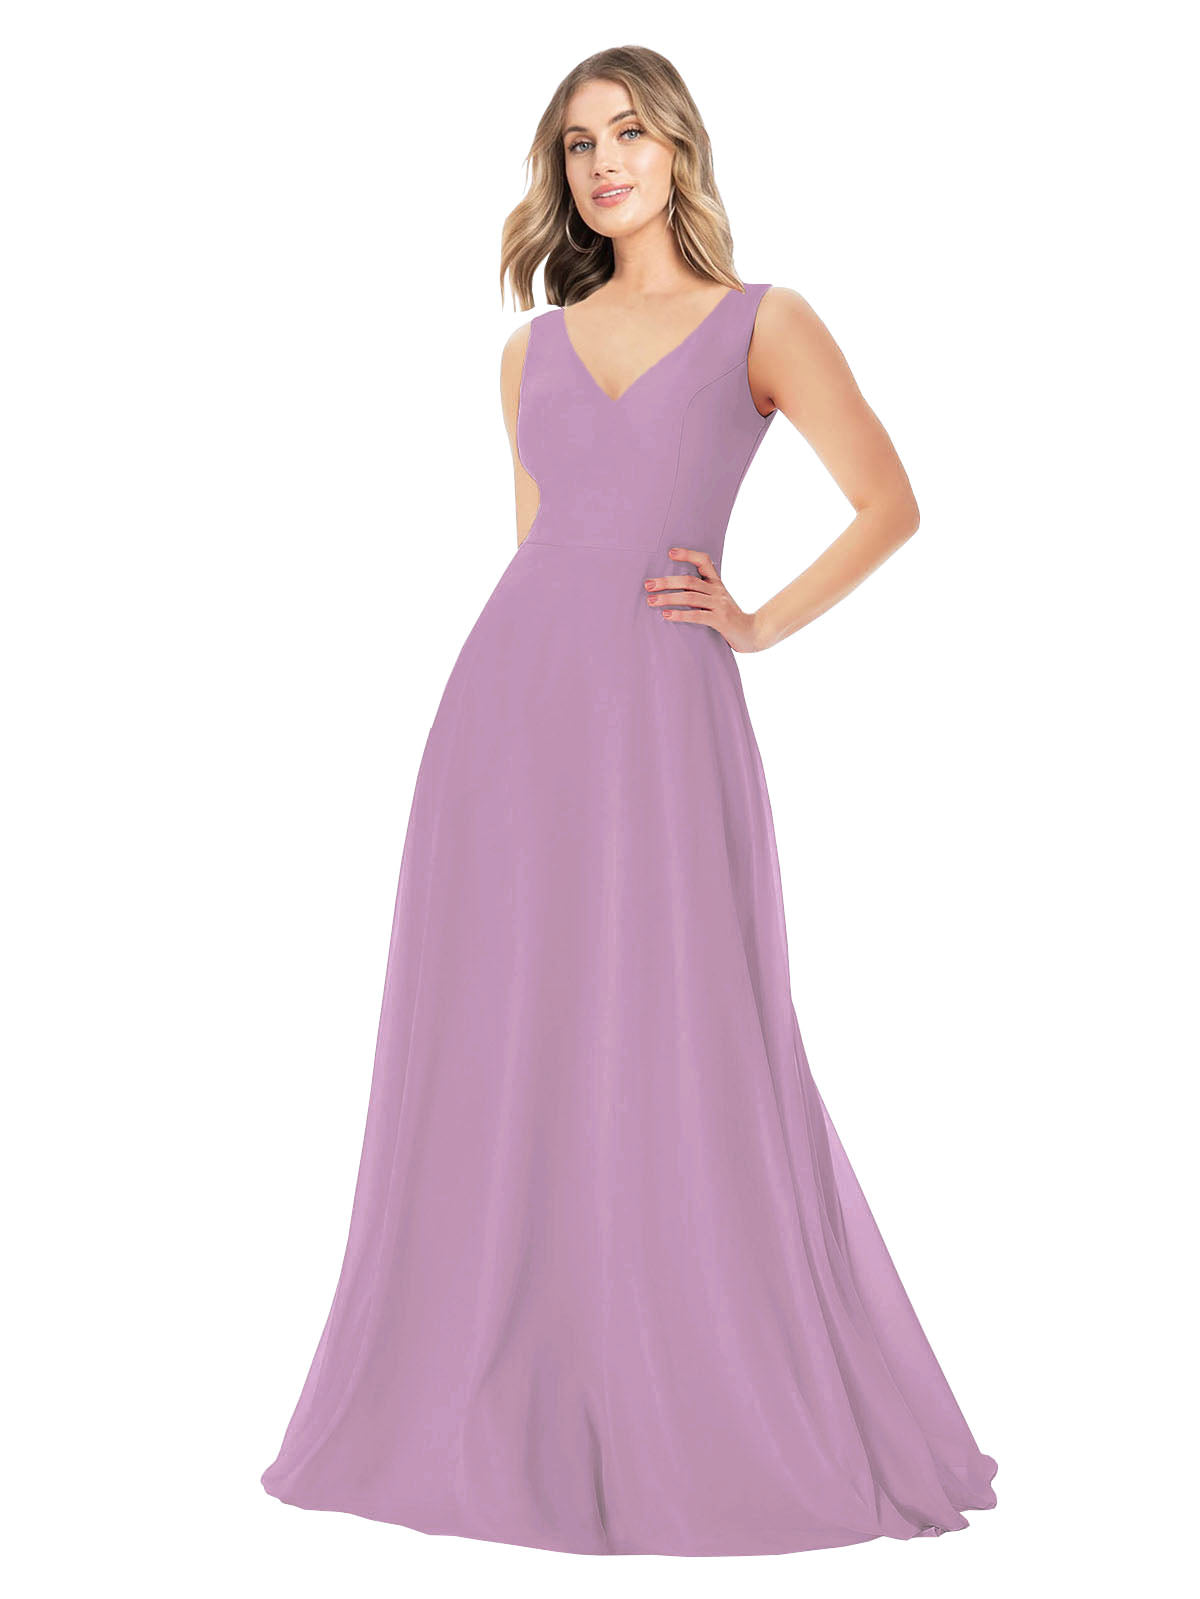 Dark Lavender A-Line V-Neck Sleeveless Long Bridesmaid Dress Evangeline